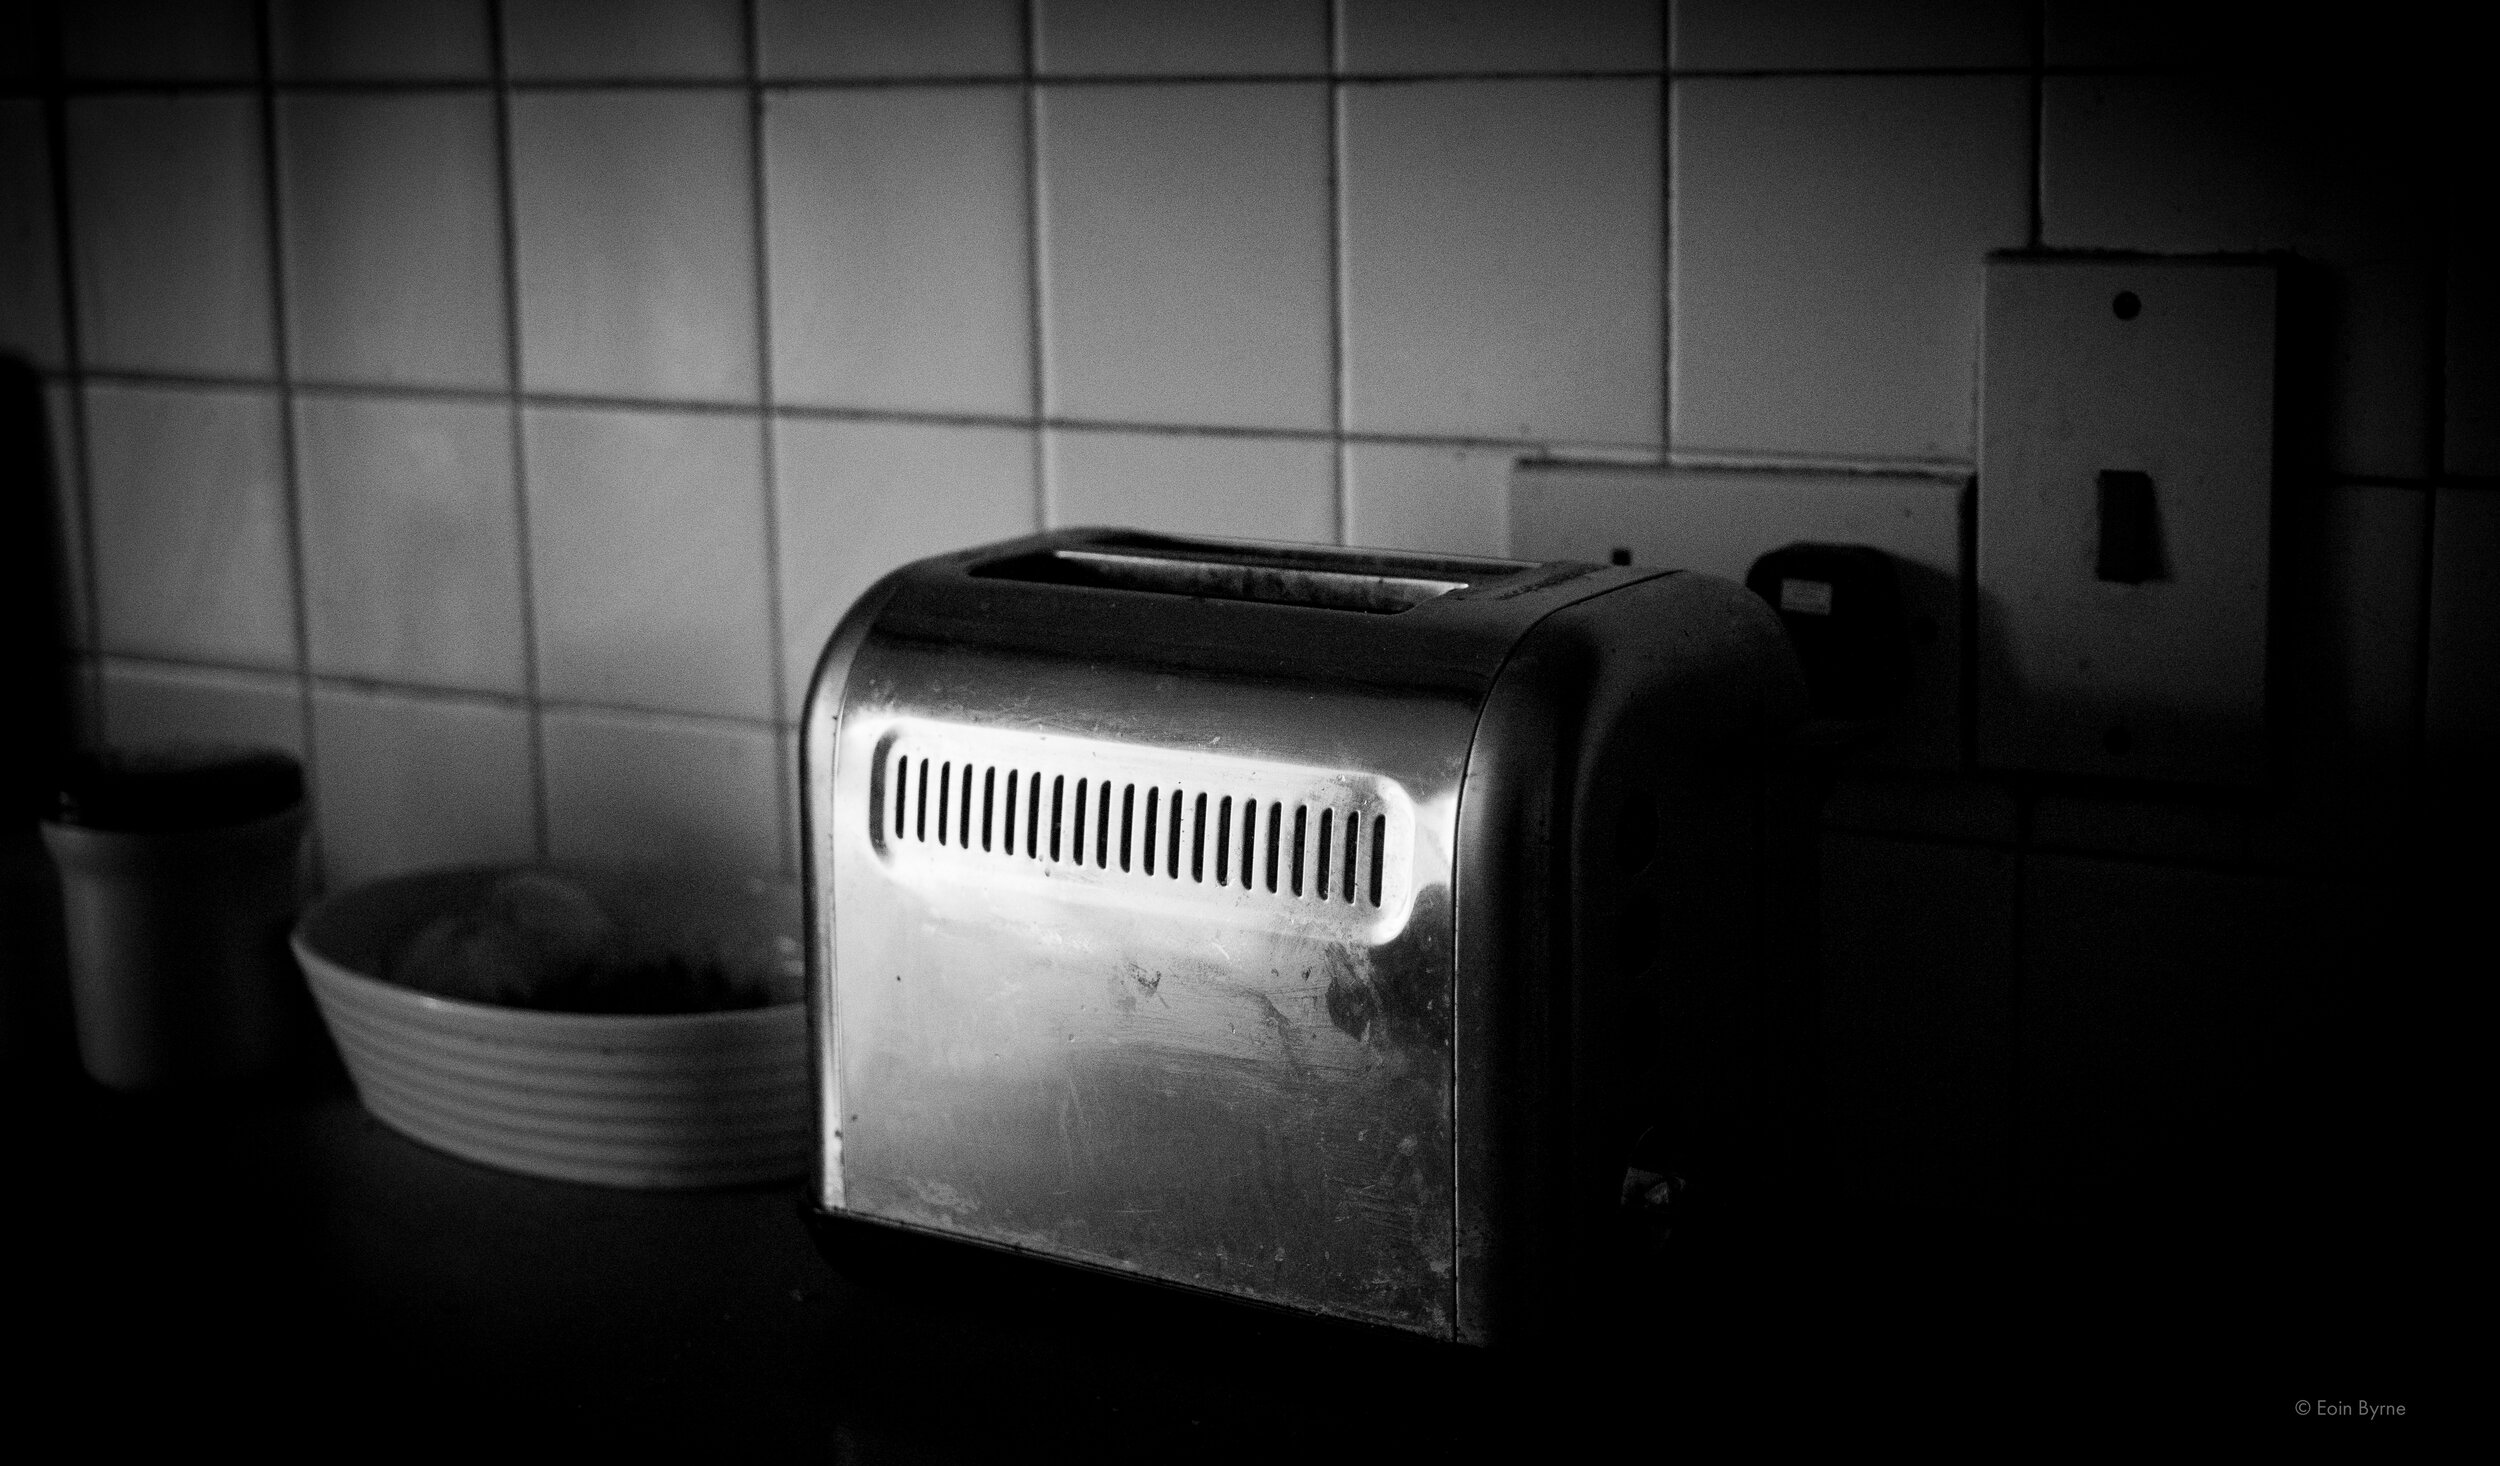 Toaster B&W 1.jpg